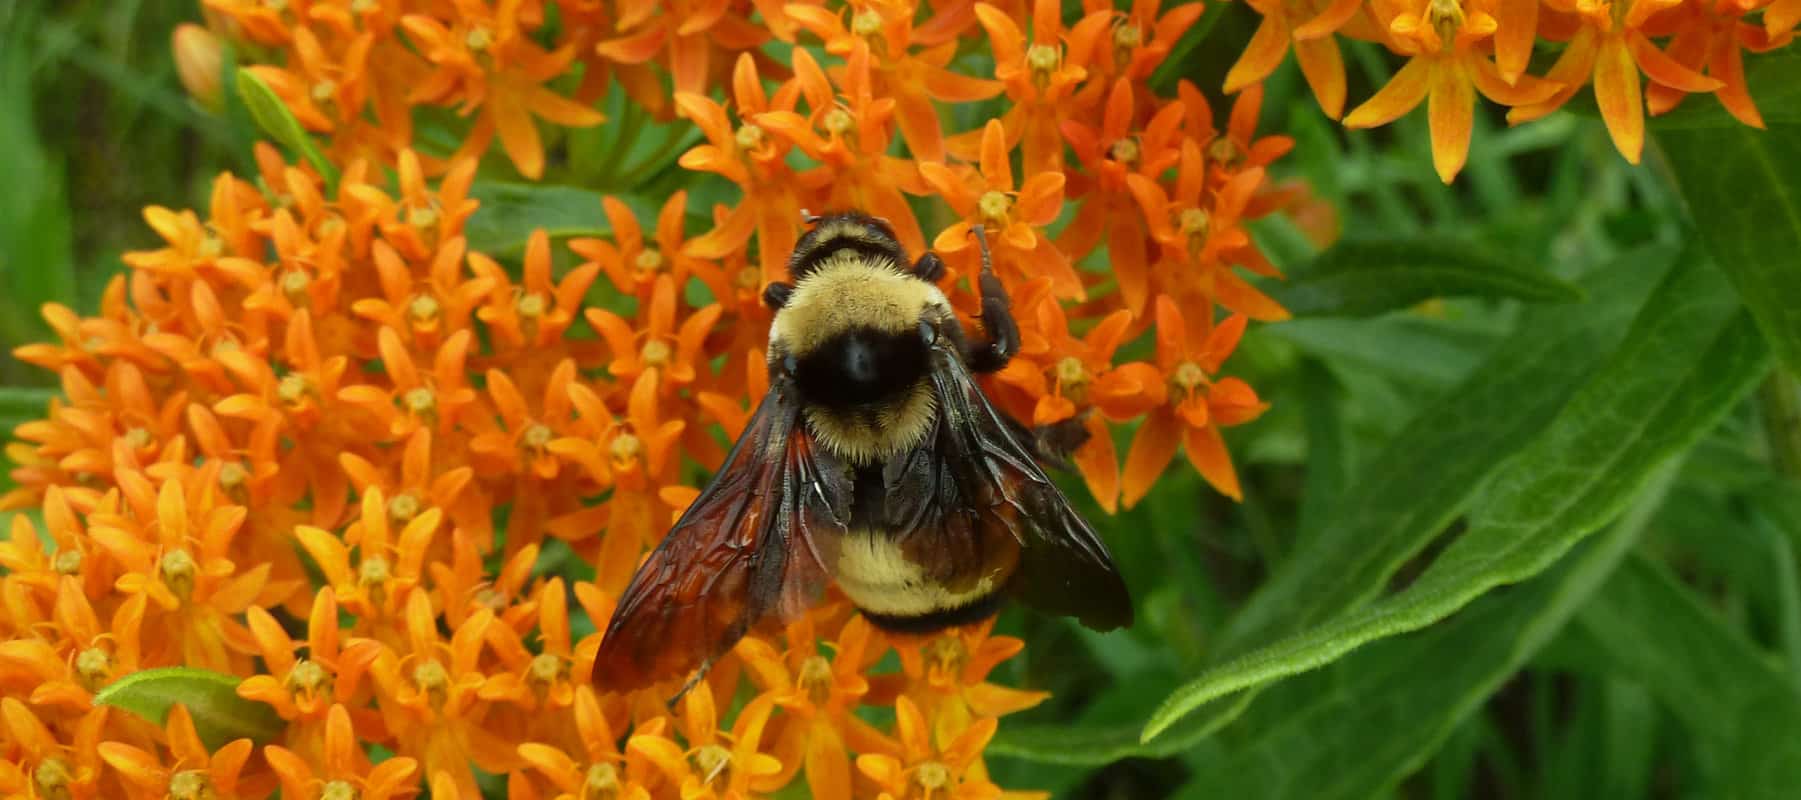 Benefits Of Having Bumblebees With Orange Legs